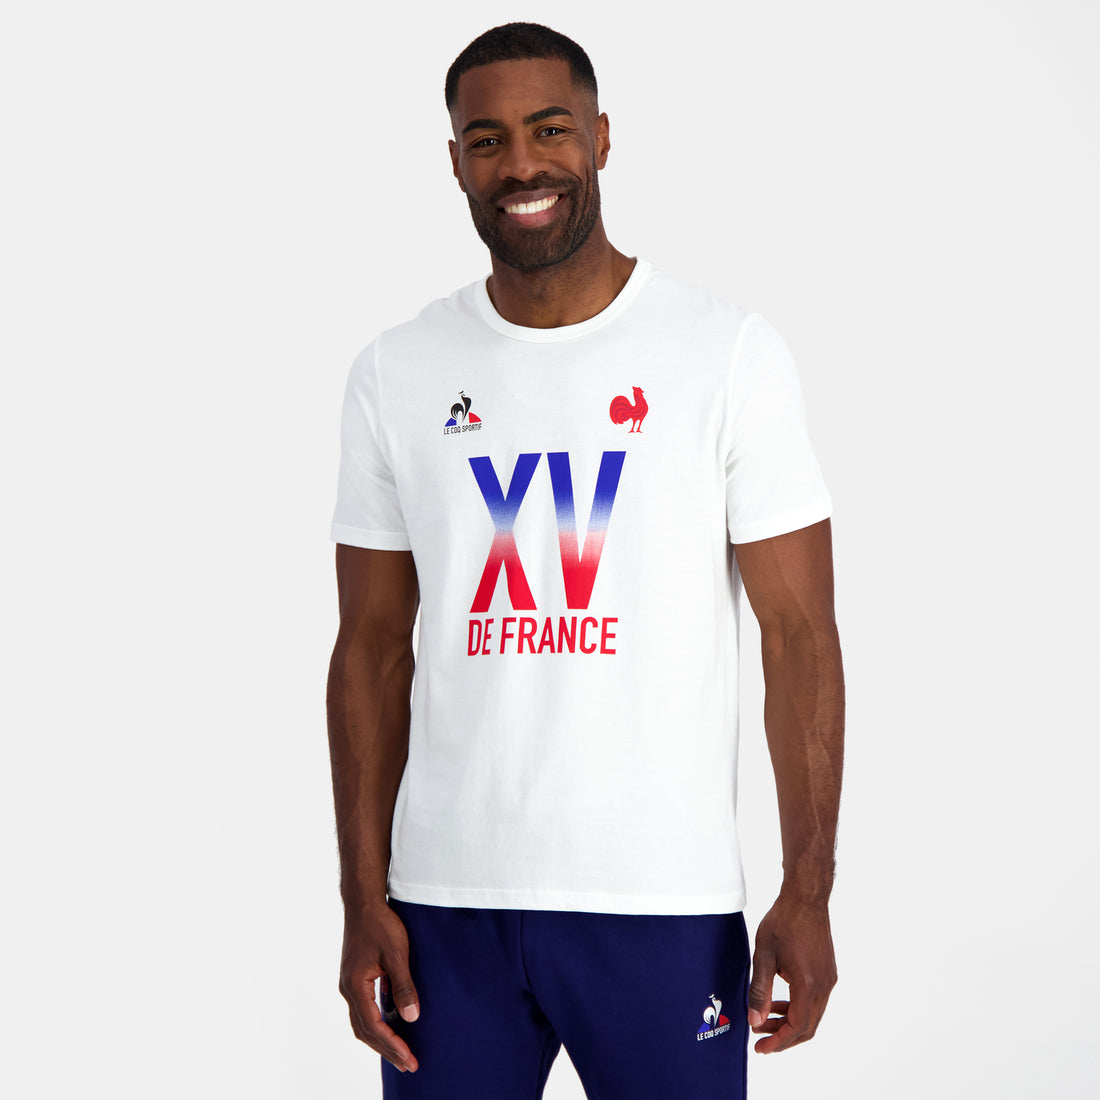 2320109-FFR FANWEAR Tee SS N°2 M new optical whi | T-shirt Homme XV de France